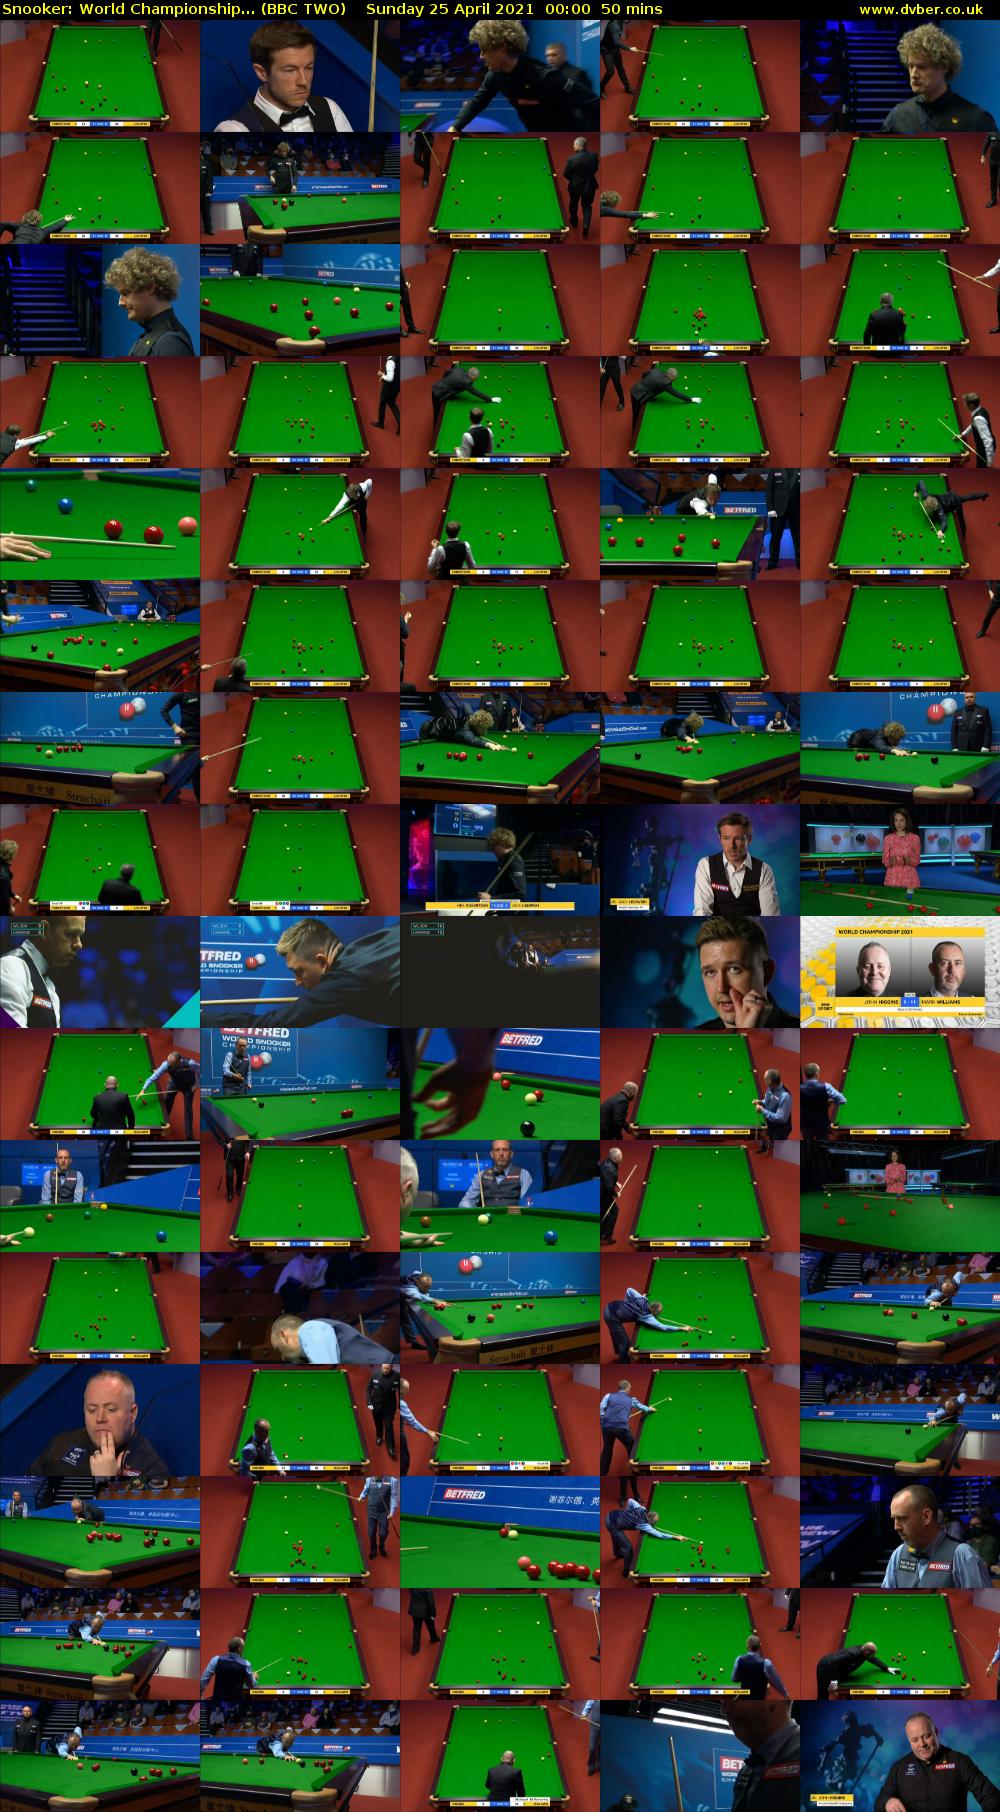 Snooker: World Championship... (BBC TWO) Sunday 25 April 2021 00:00 - 00:50